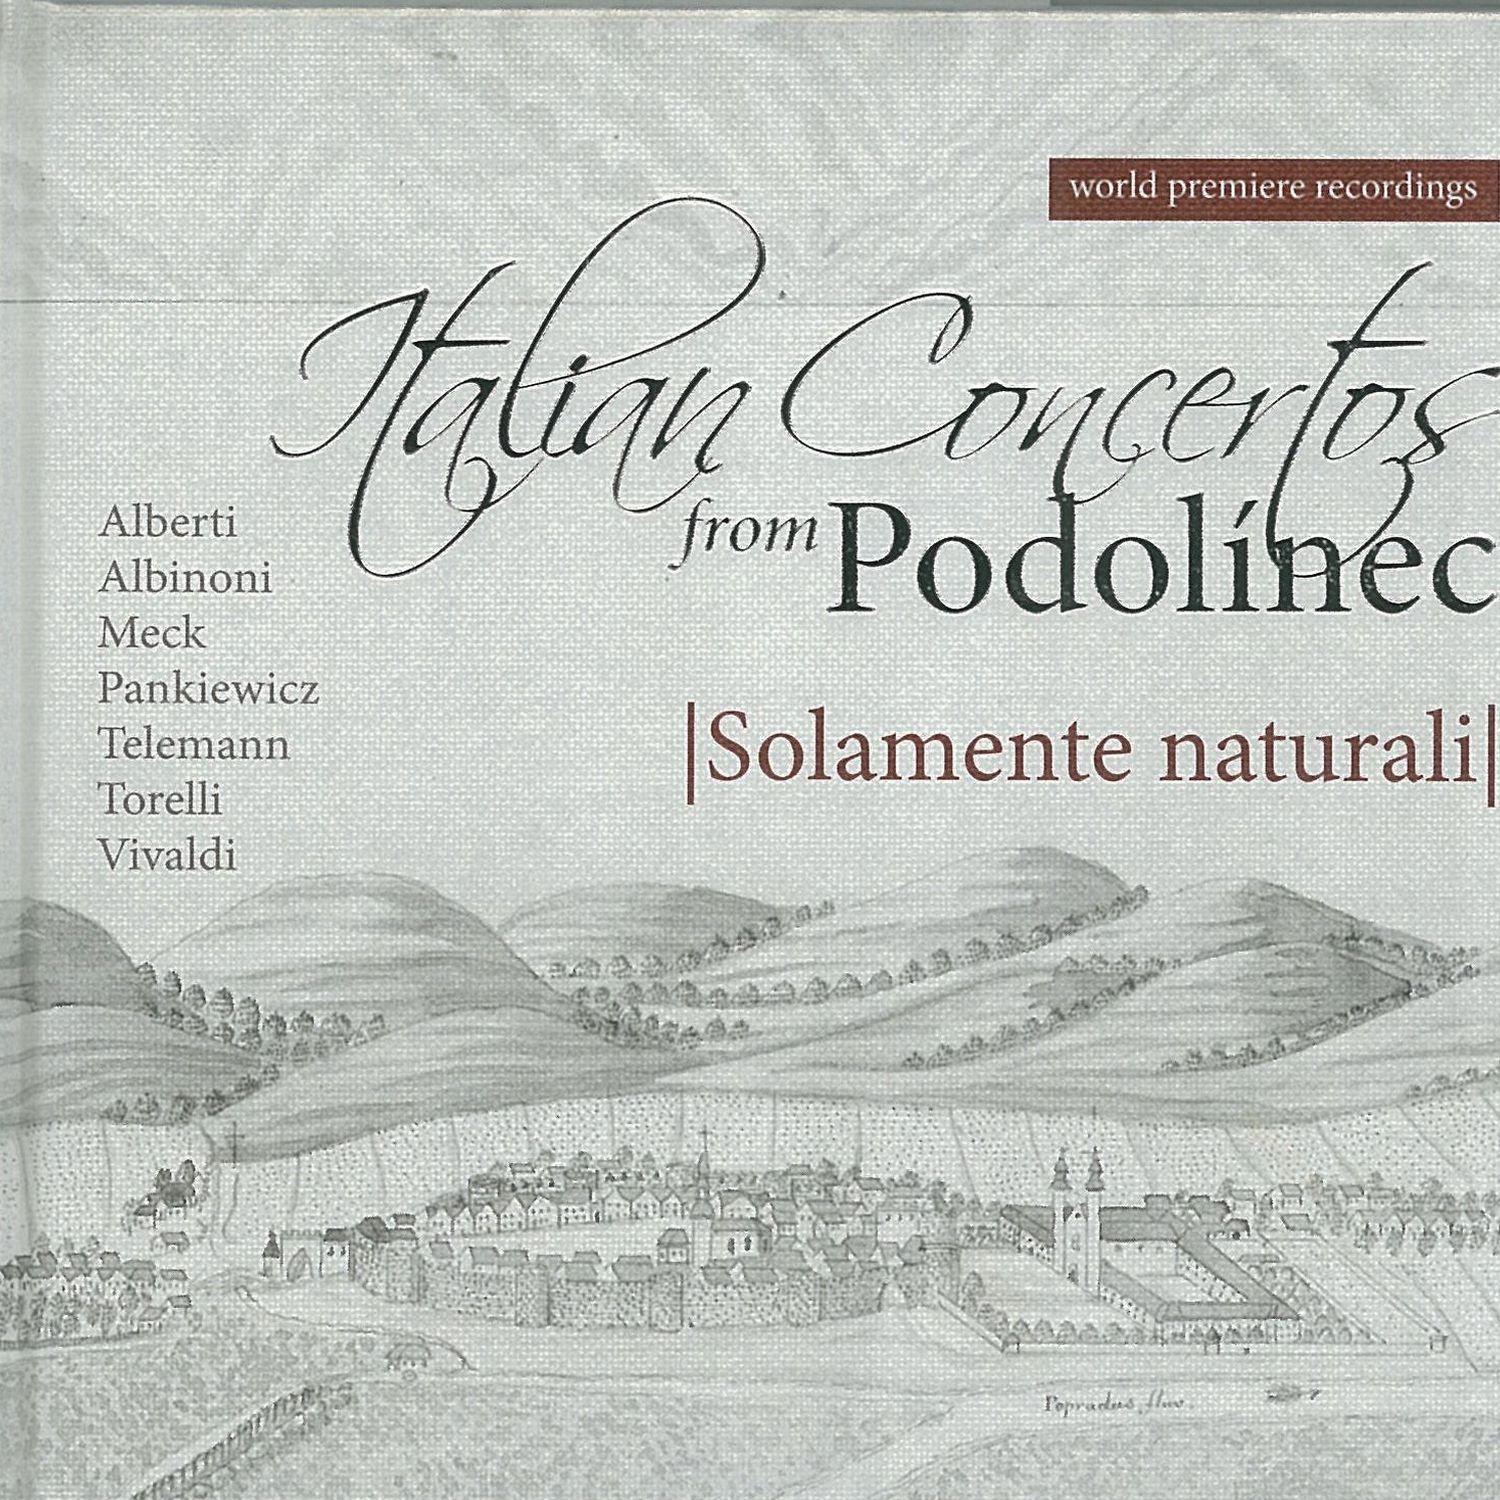 Italian Concertos from Podoli nec